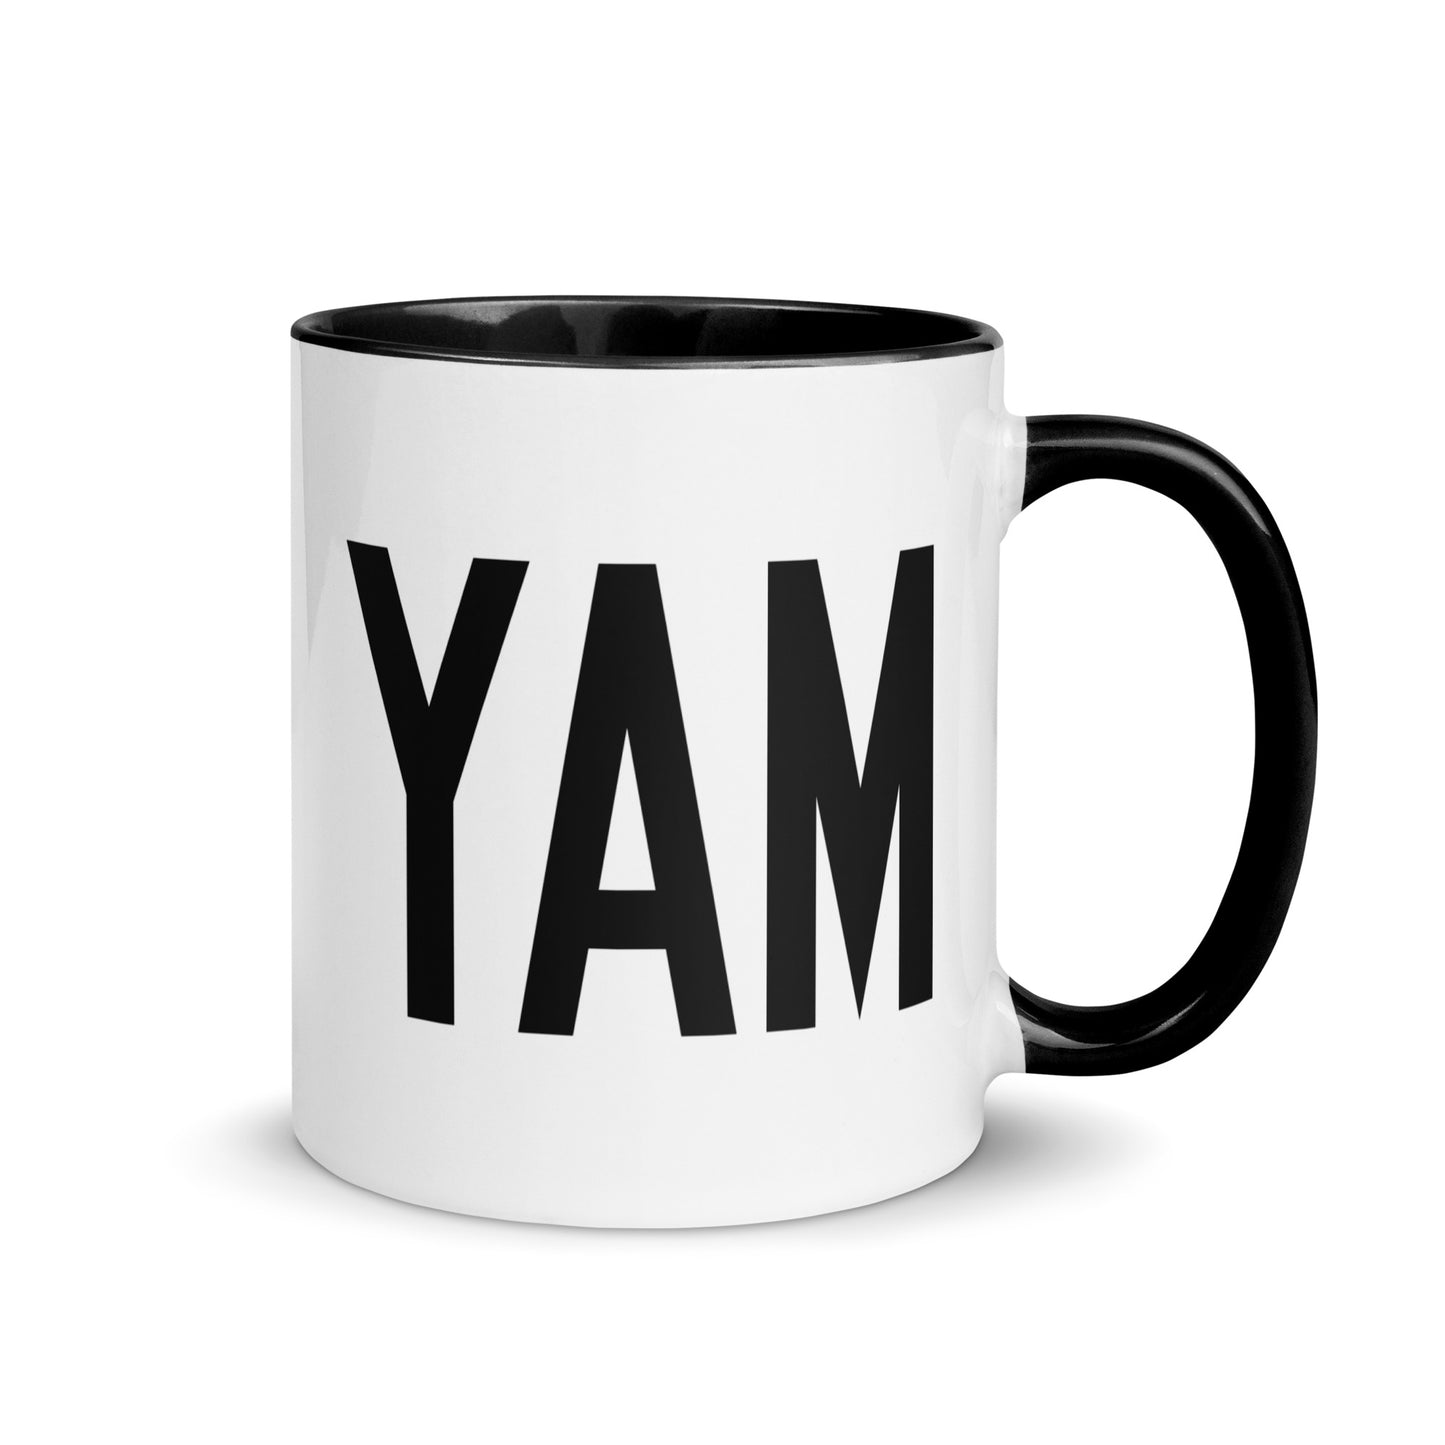 Aviation-Theme Coffee Mug - Black • YAM Sault-Ste-Marie • YHM Designs - Image 01